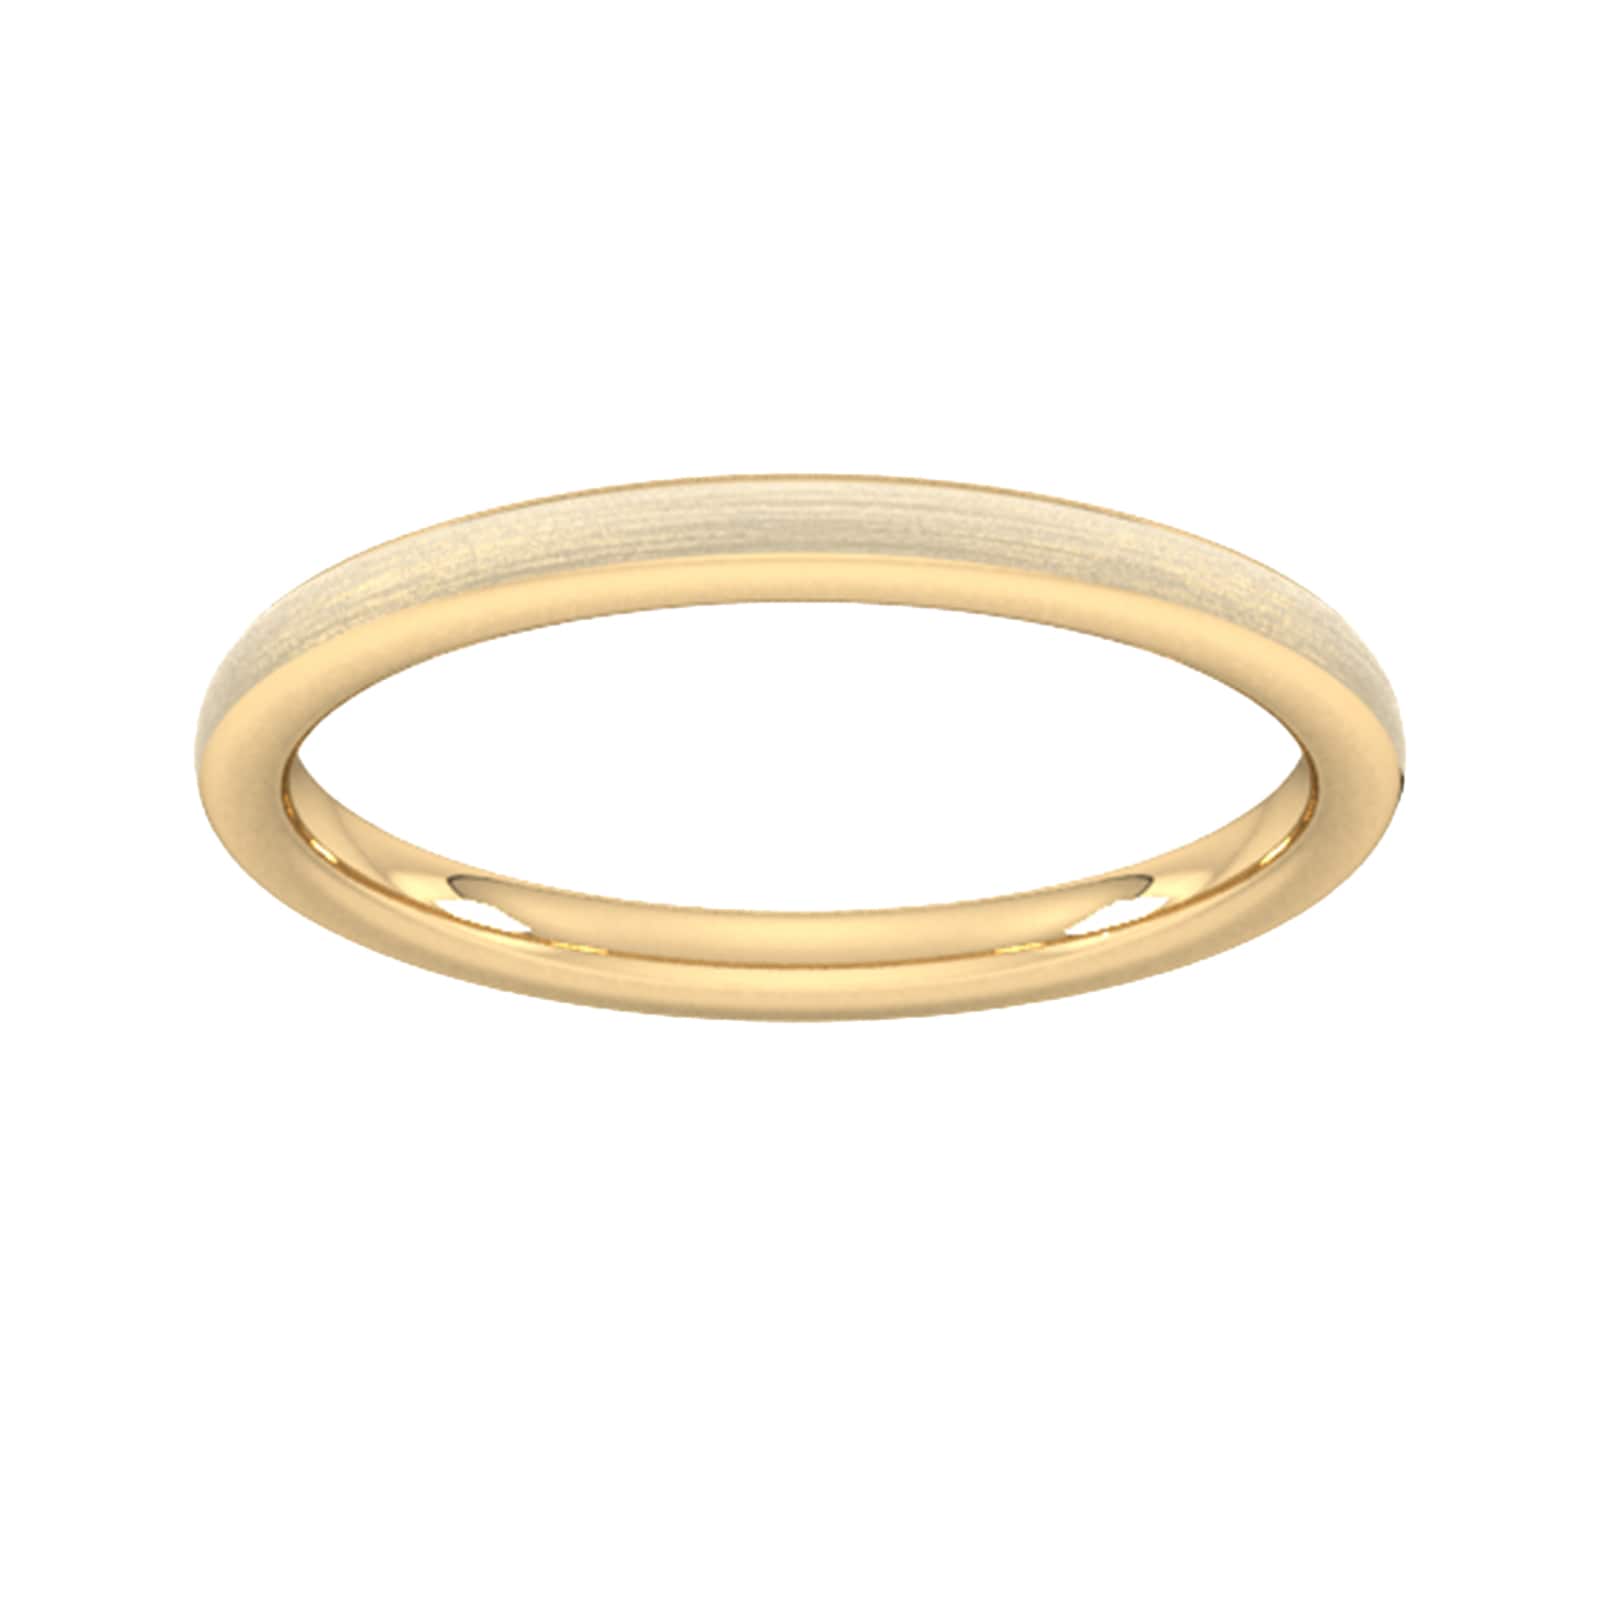 2mm Slight Court Standard Matt Finished Wedding Ring In 18 Carat Yellow Gold - Ring Size X